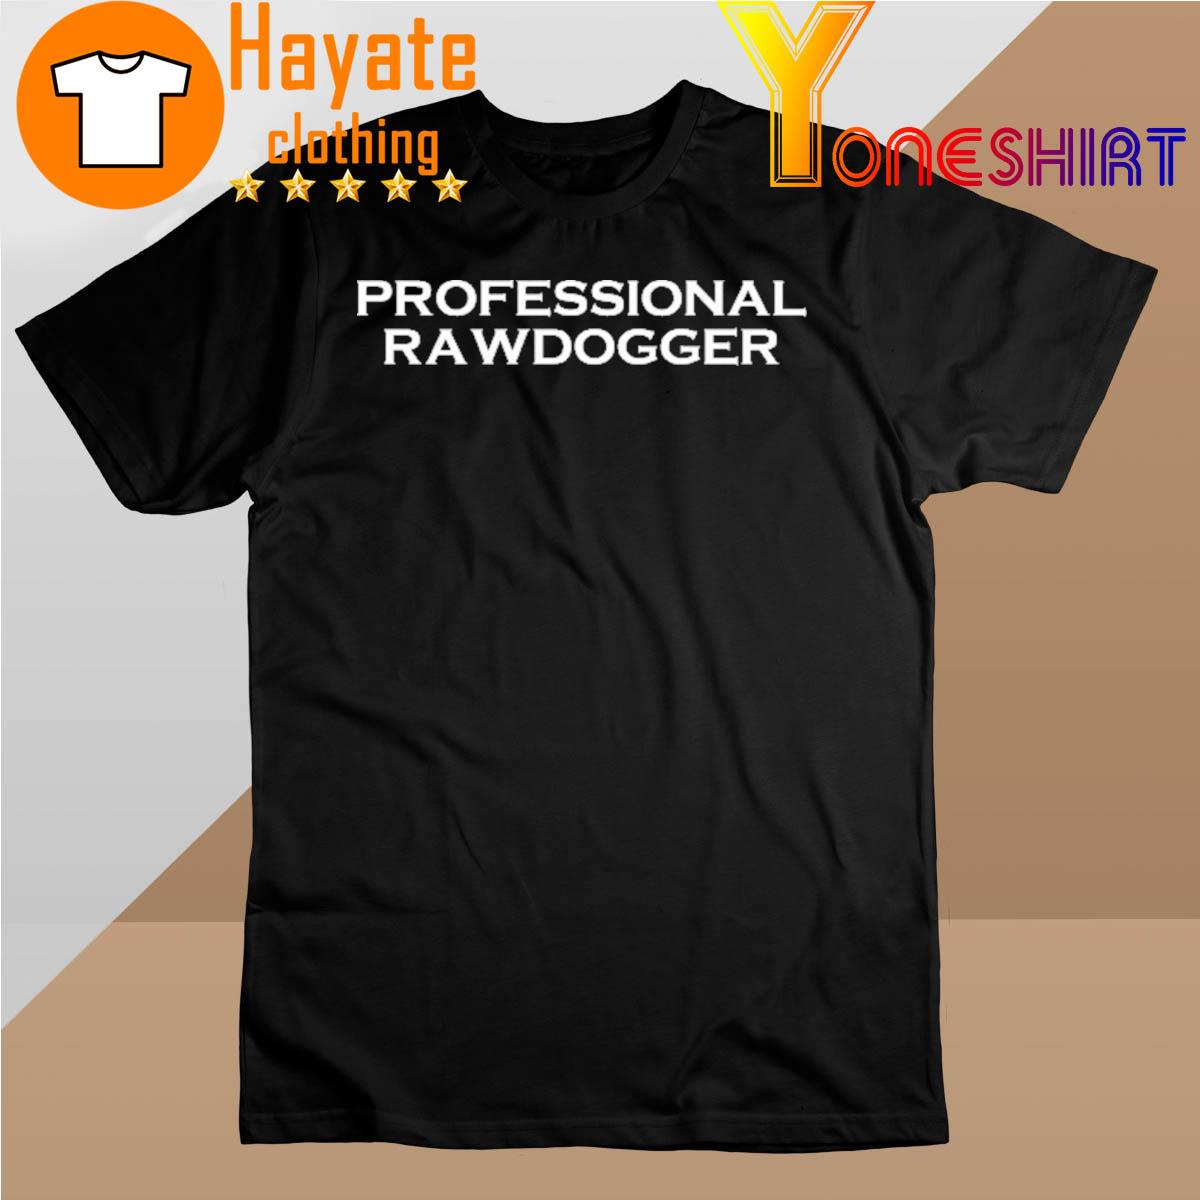 Professional Rawdogger shirt